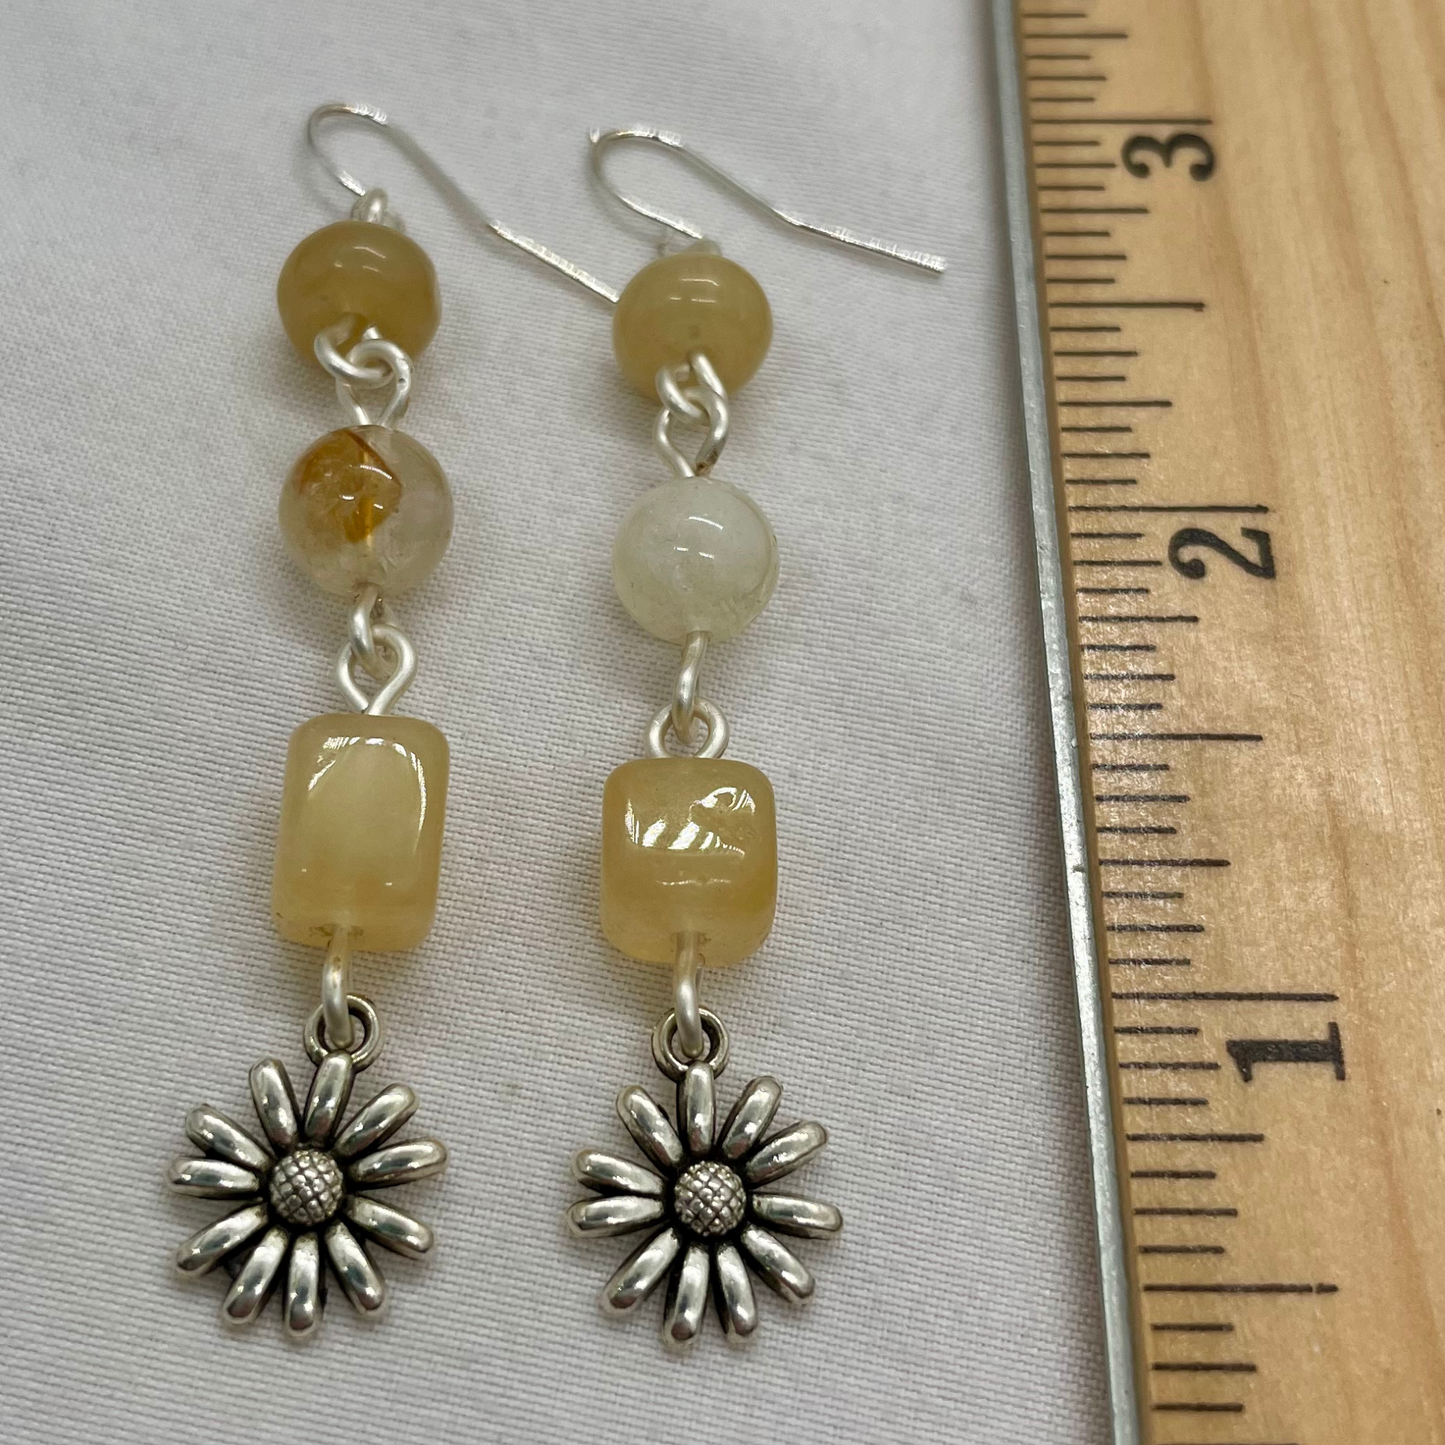 Honey Sunshine Earrings: Unique Citrine Gemstone Dangles with Flower Charm | summer gift | fun boho style | yellow for sunshine